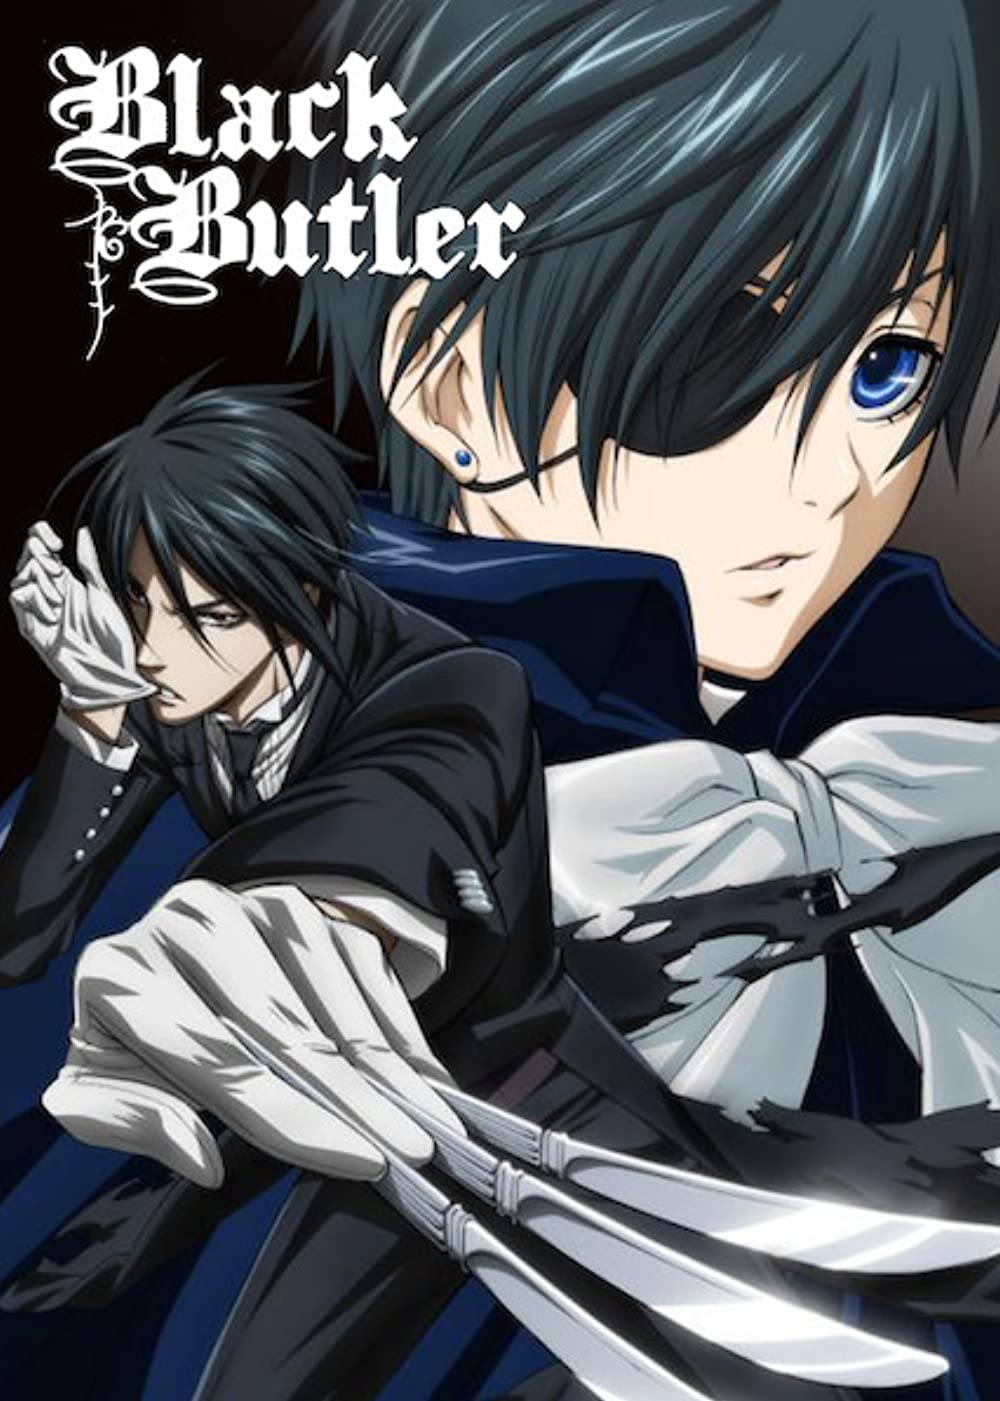 Amazon.com: Black Butler Wall Scroll Poster Fabric Painting for Anime  Sebastian Michaelis 086 L: Posters & Prints